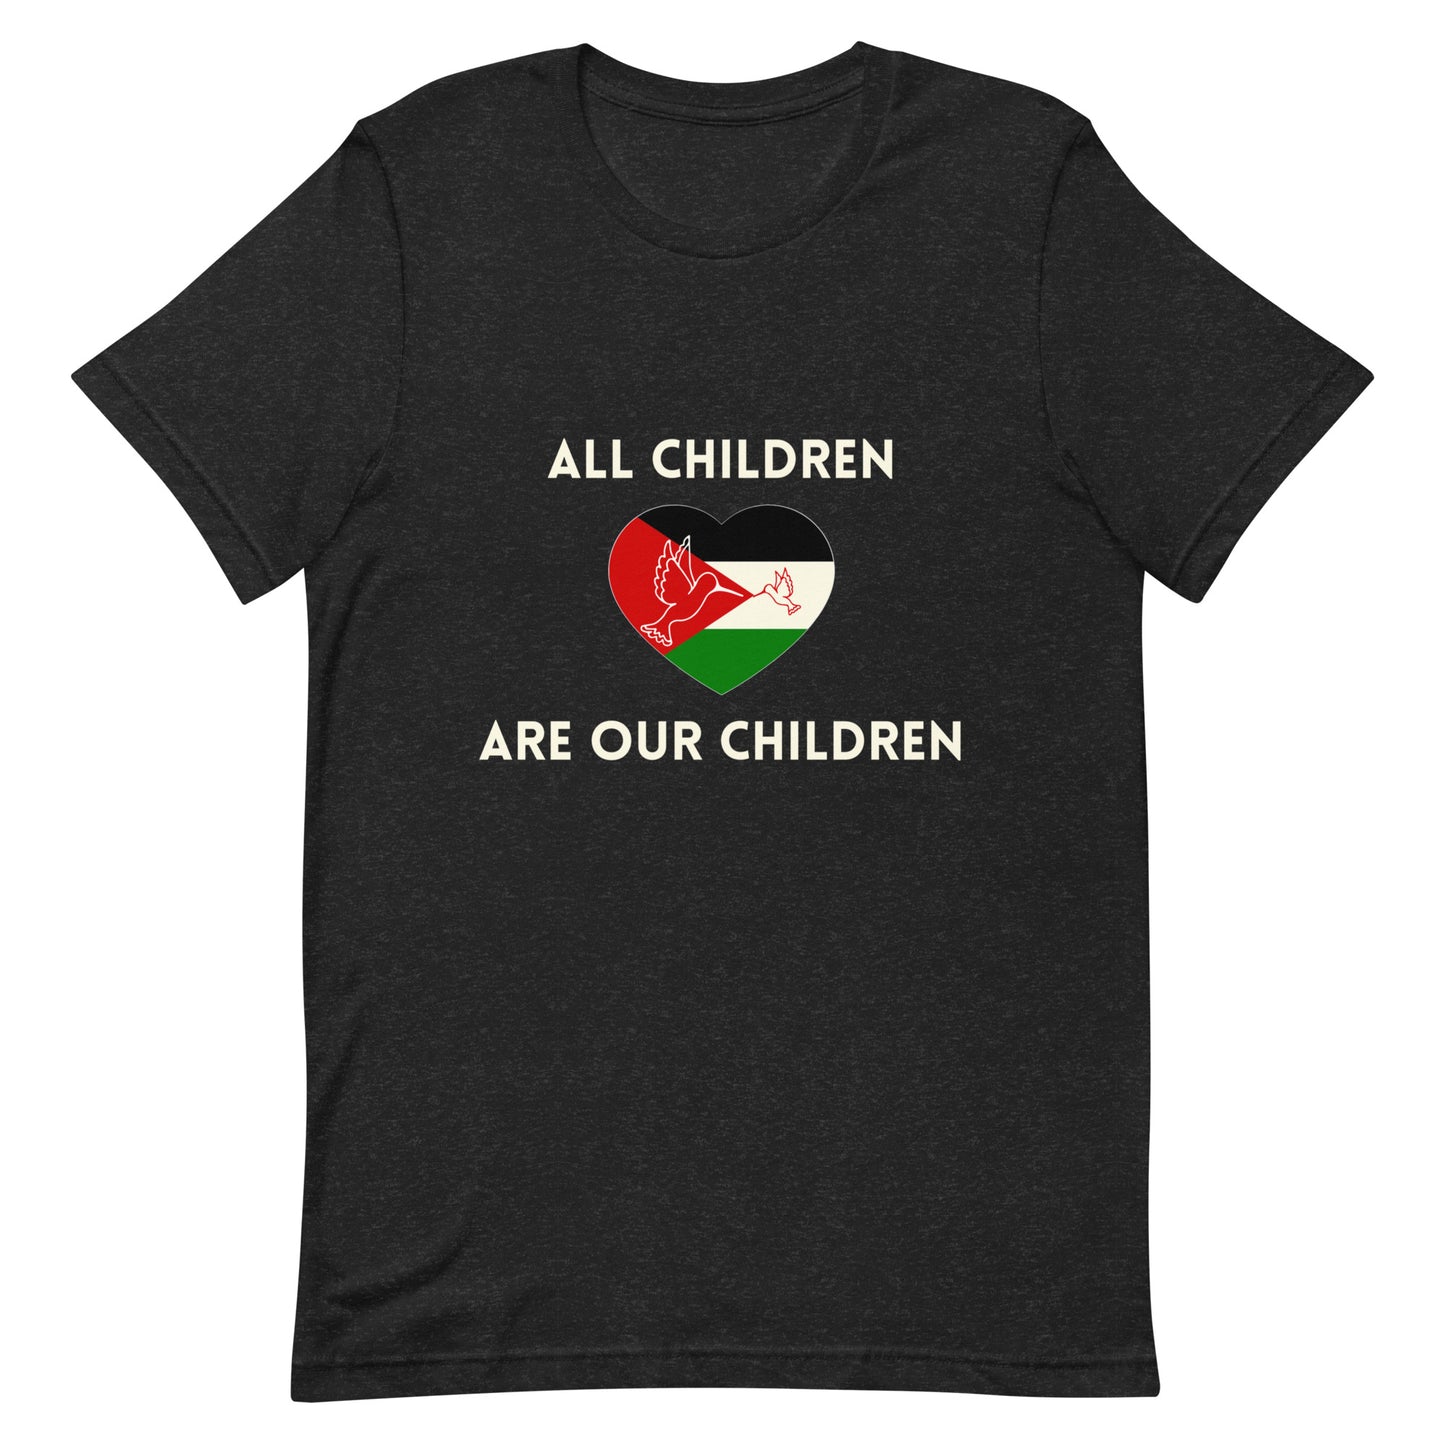 All children are our children ❤️